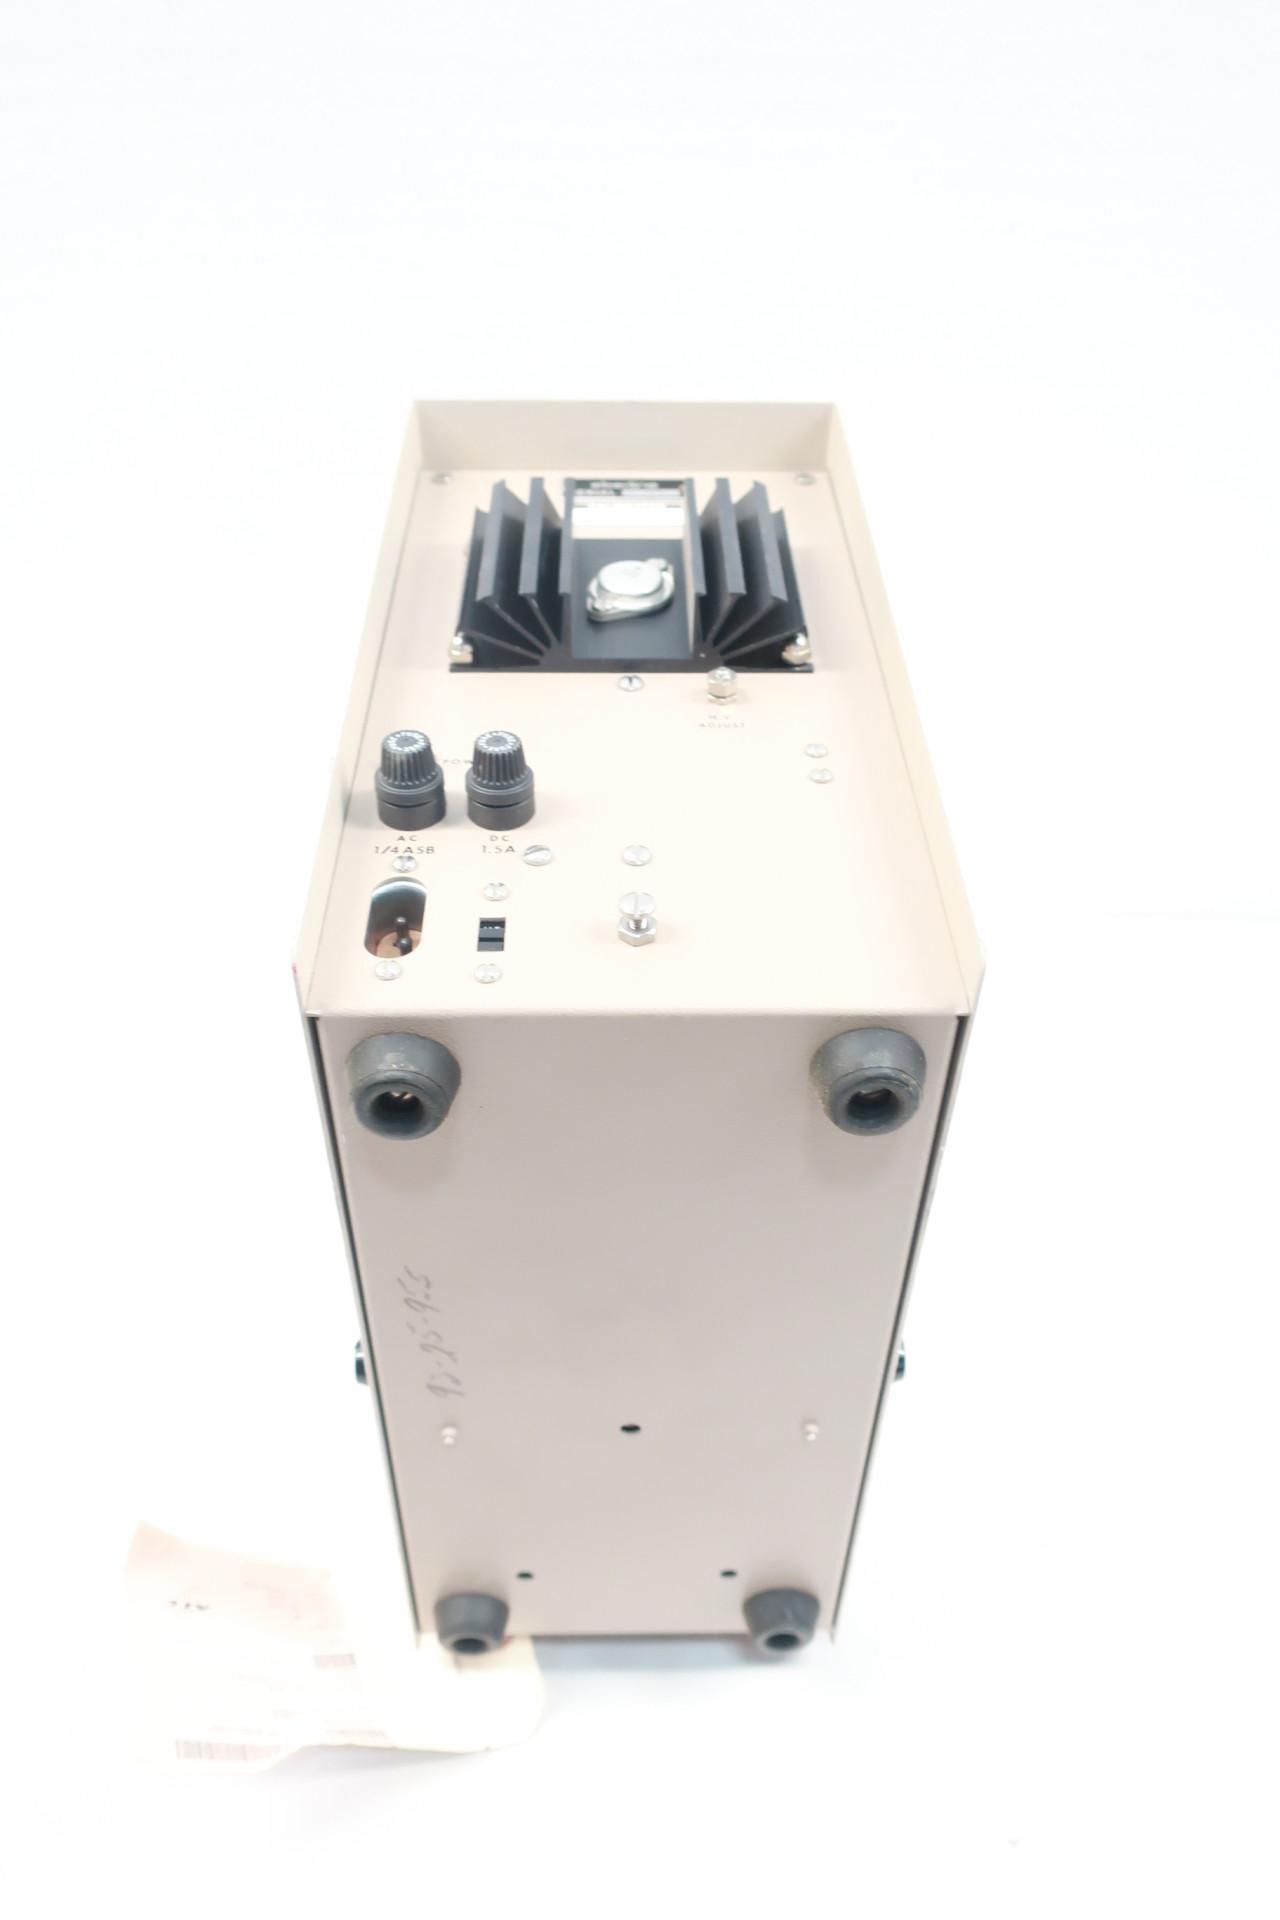 Eberline SAC-4 Scintillation Alpha Counter 